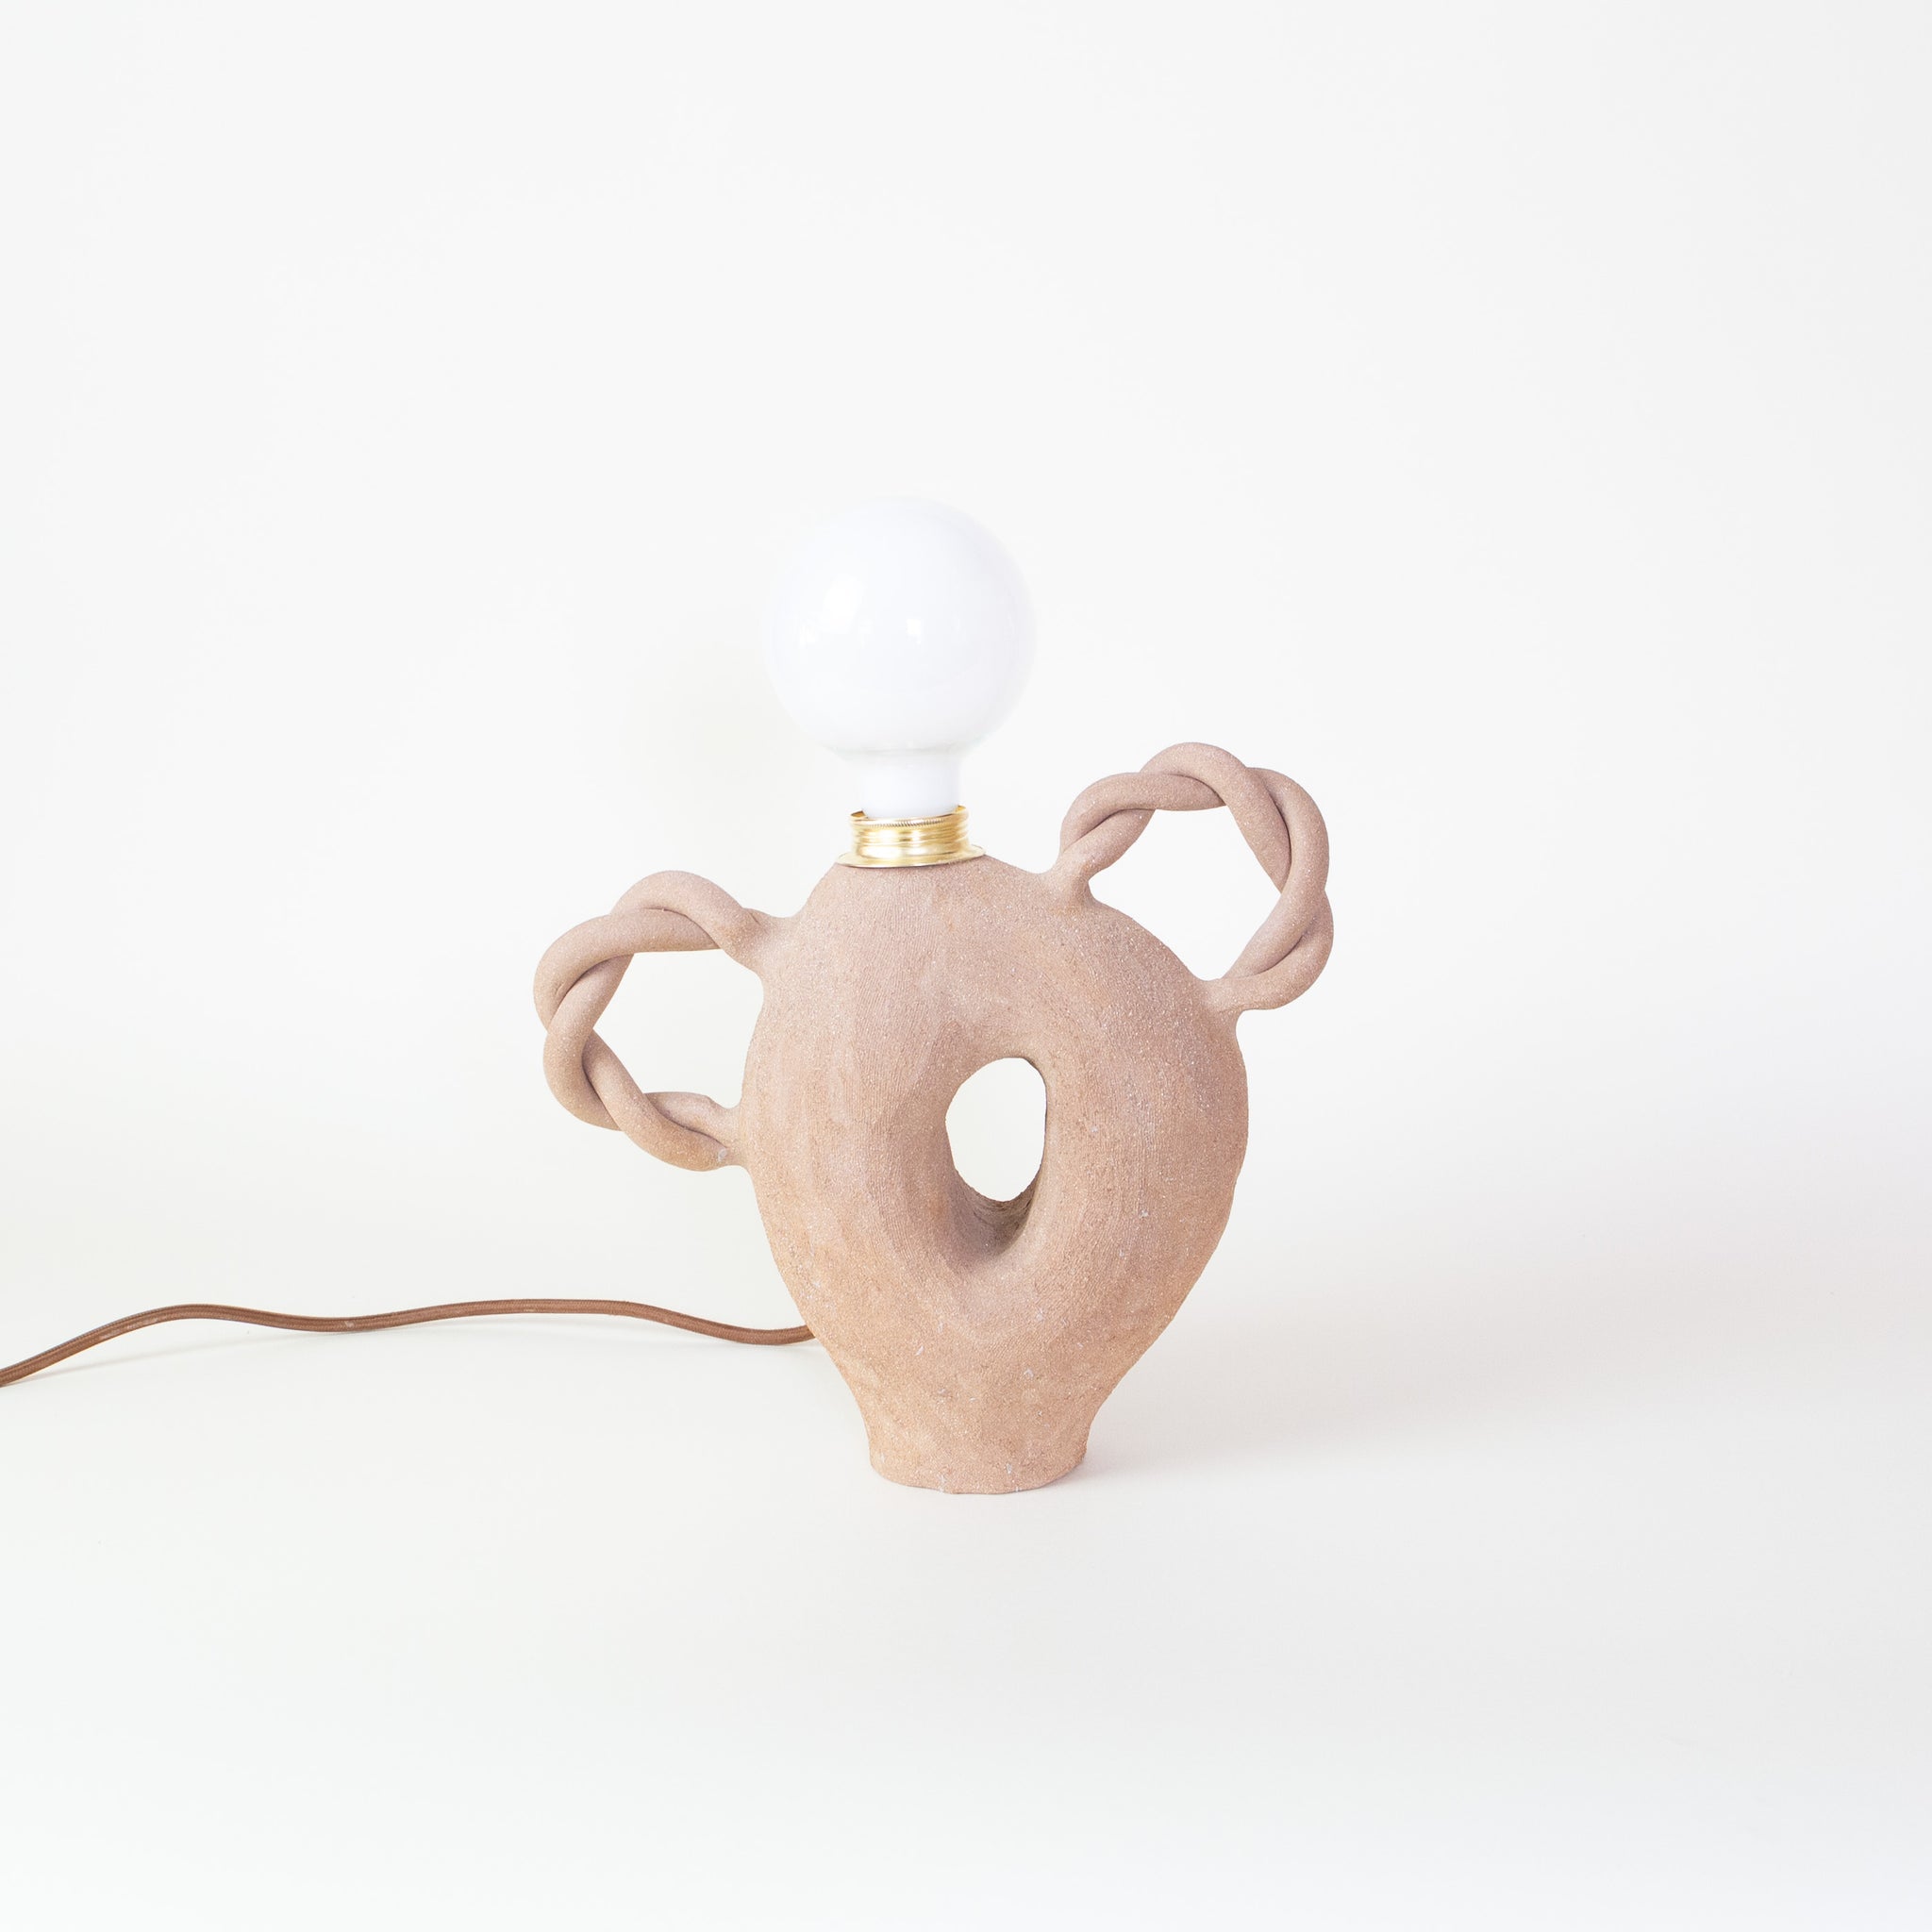 Clandestine Céramique | Twisted Table Lamp